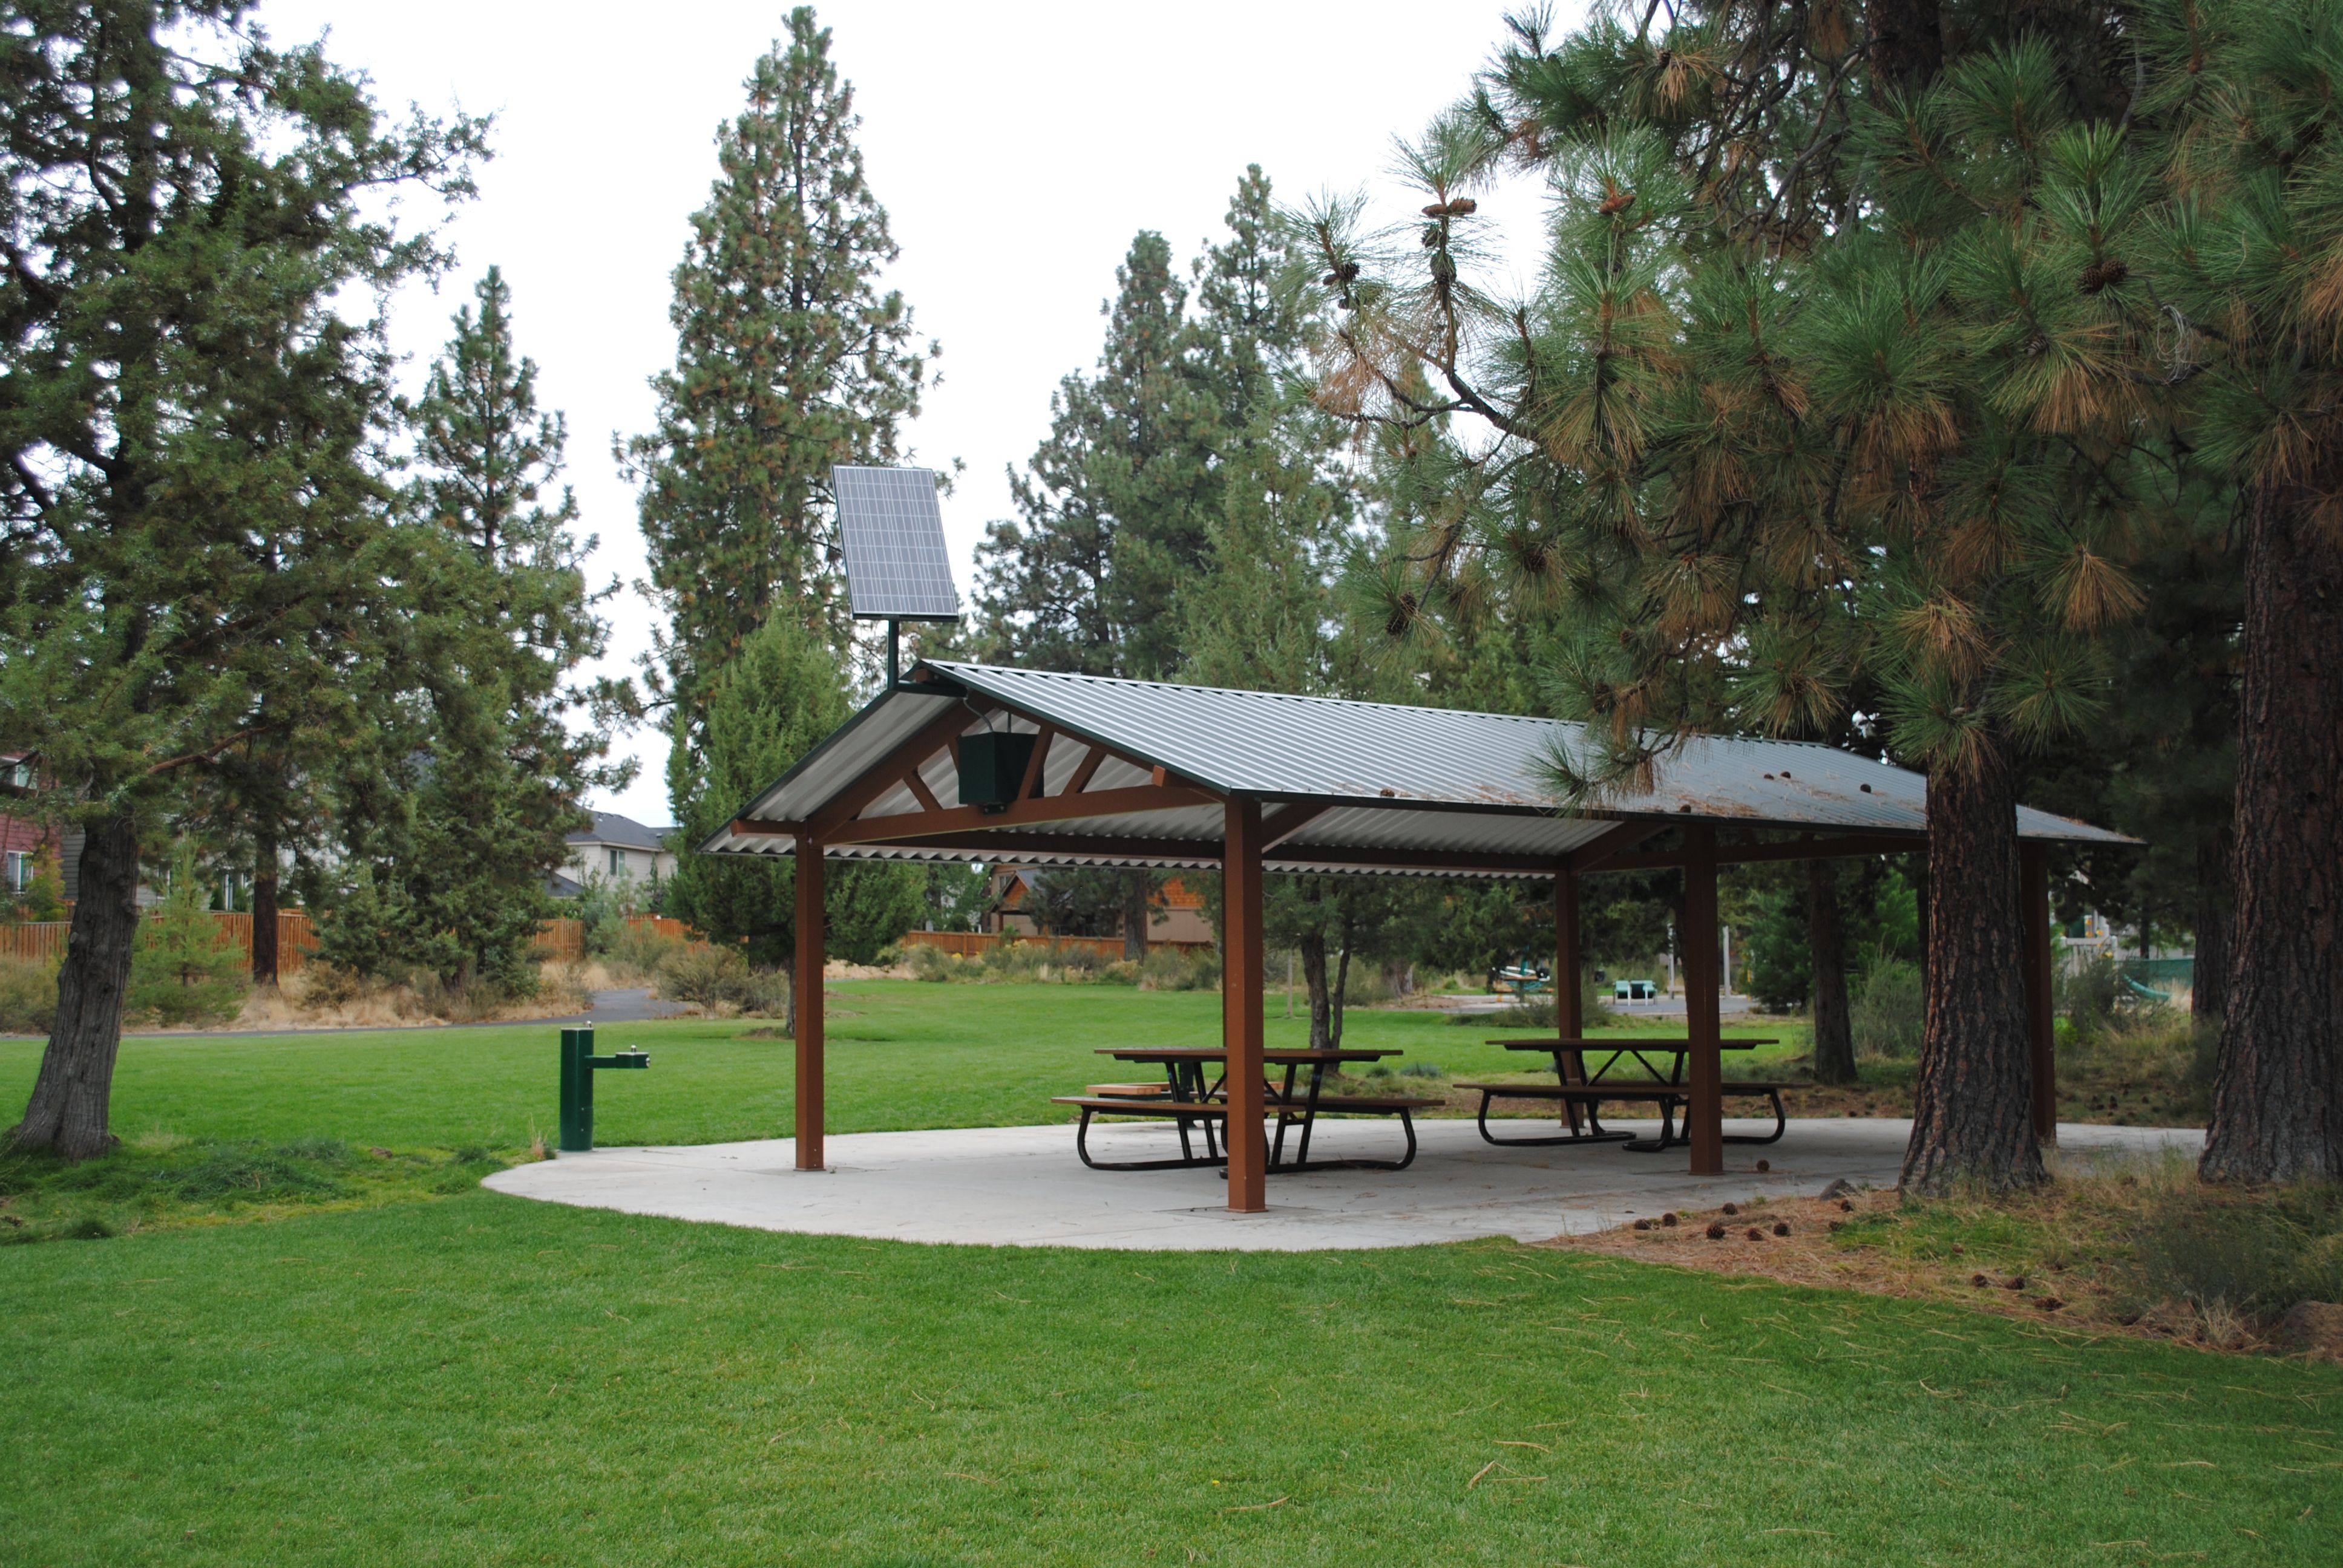 the picnic shelter at pine ridge